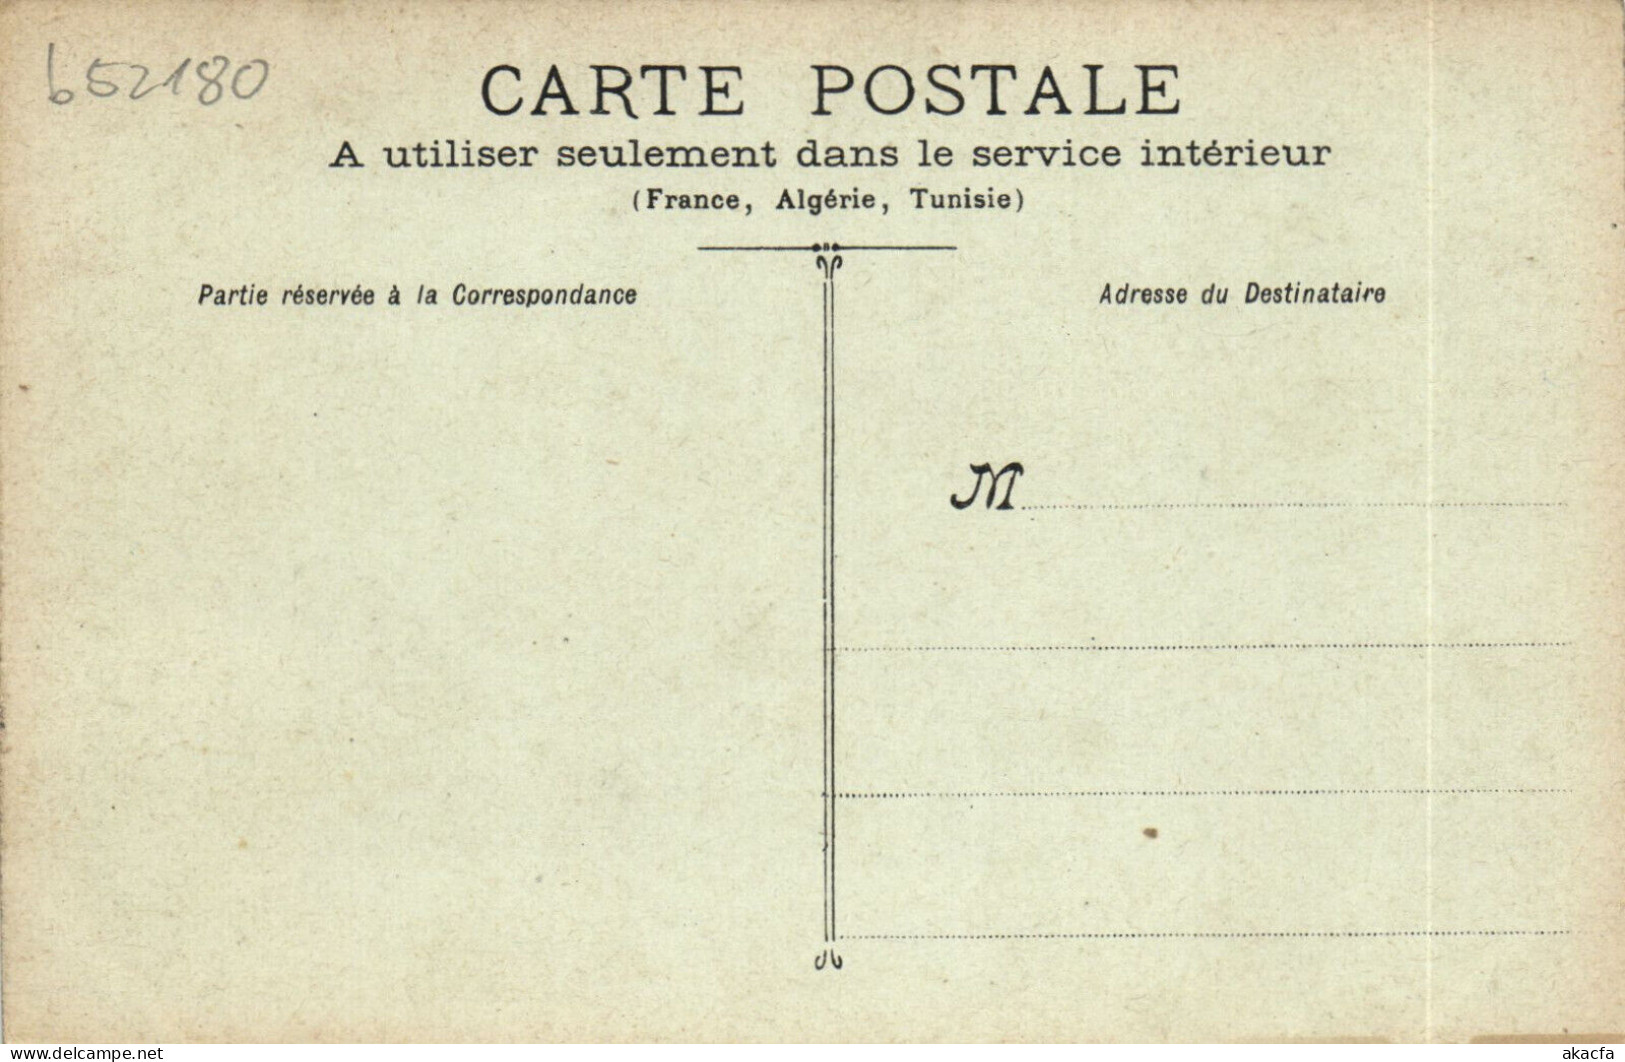 PC ARTIST SIGNED, CH. BEAUVAIS, SPORTS, TROTTING, Vintage Postcard (b52180) - Beauvais